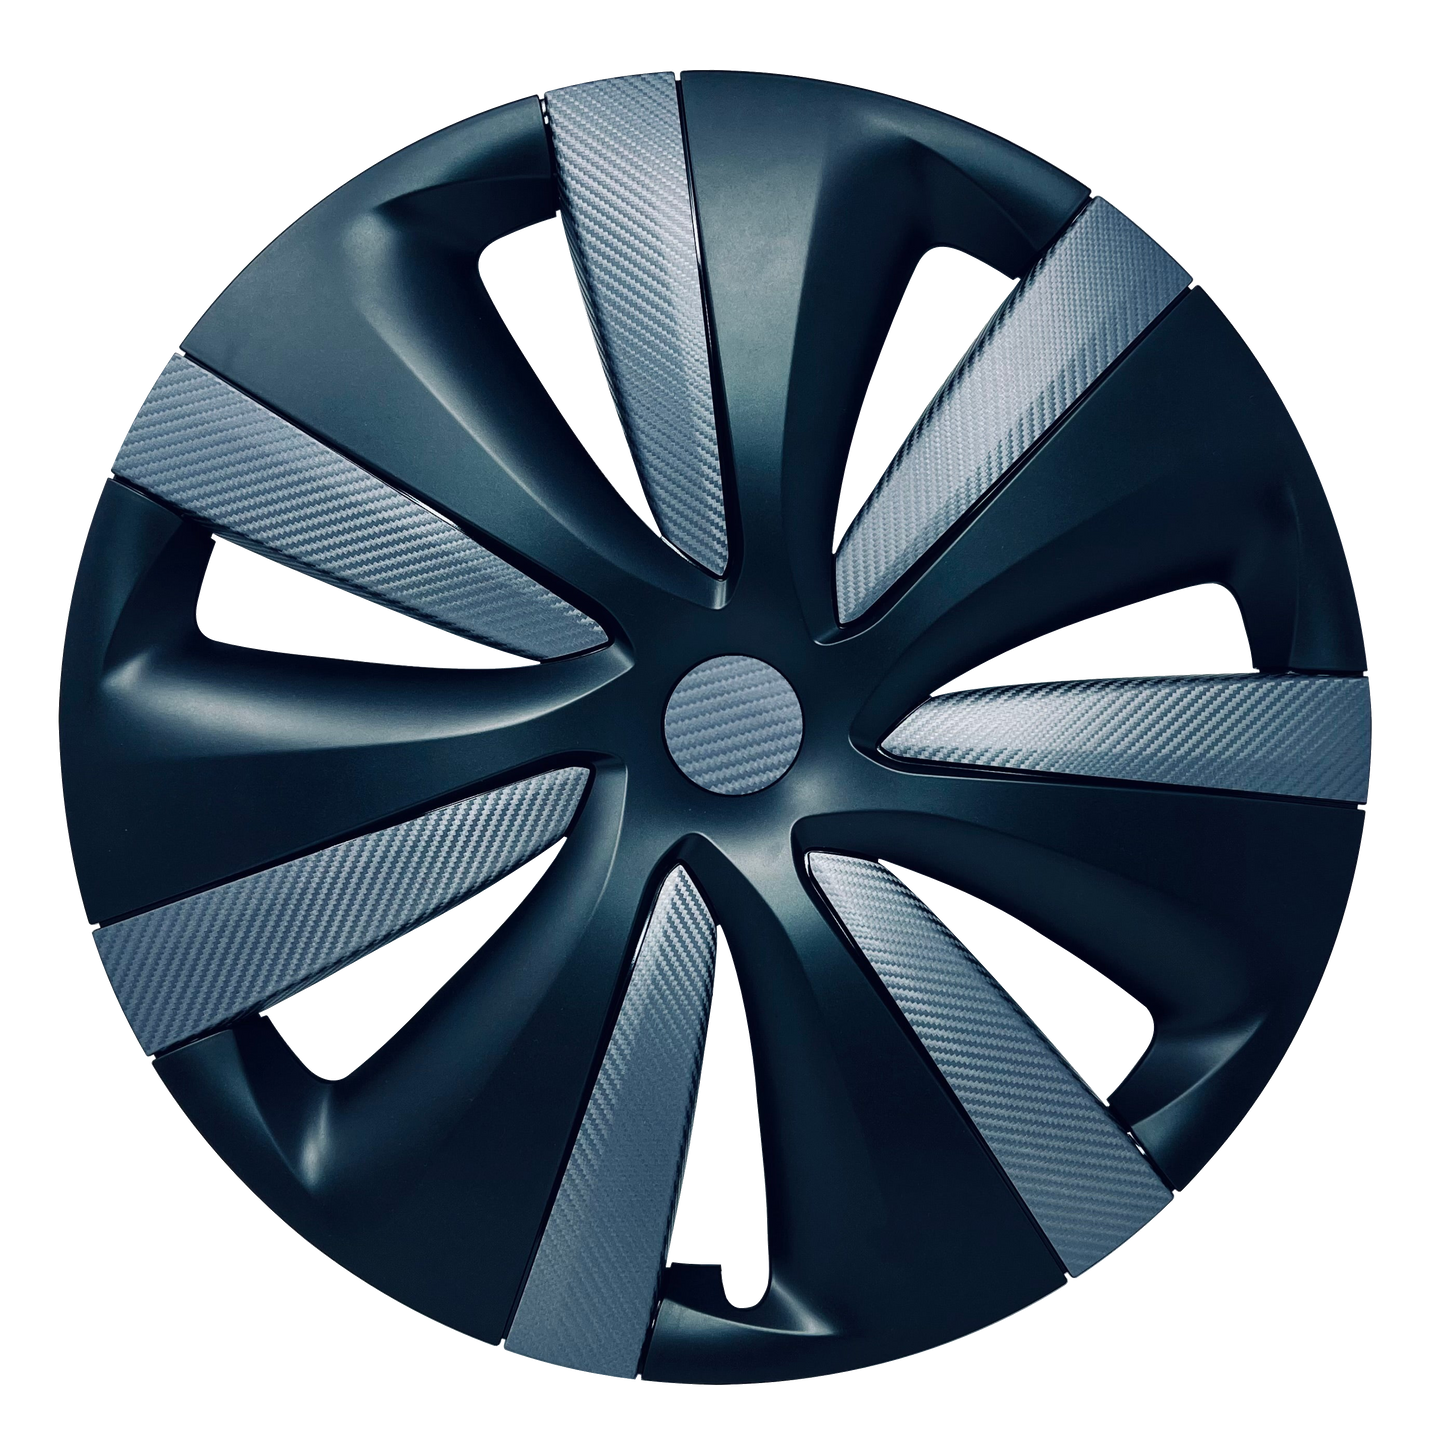 19" Tempest Wheels Vinyl Wrap for Tesla Model S (Plaid & Long Range, Refresh)